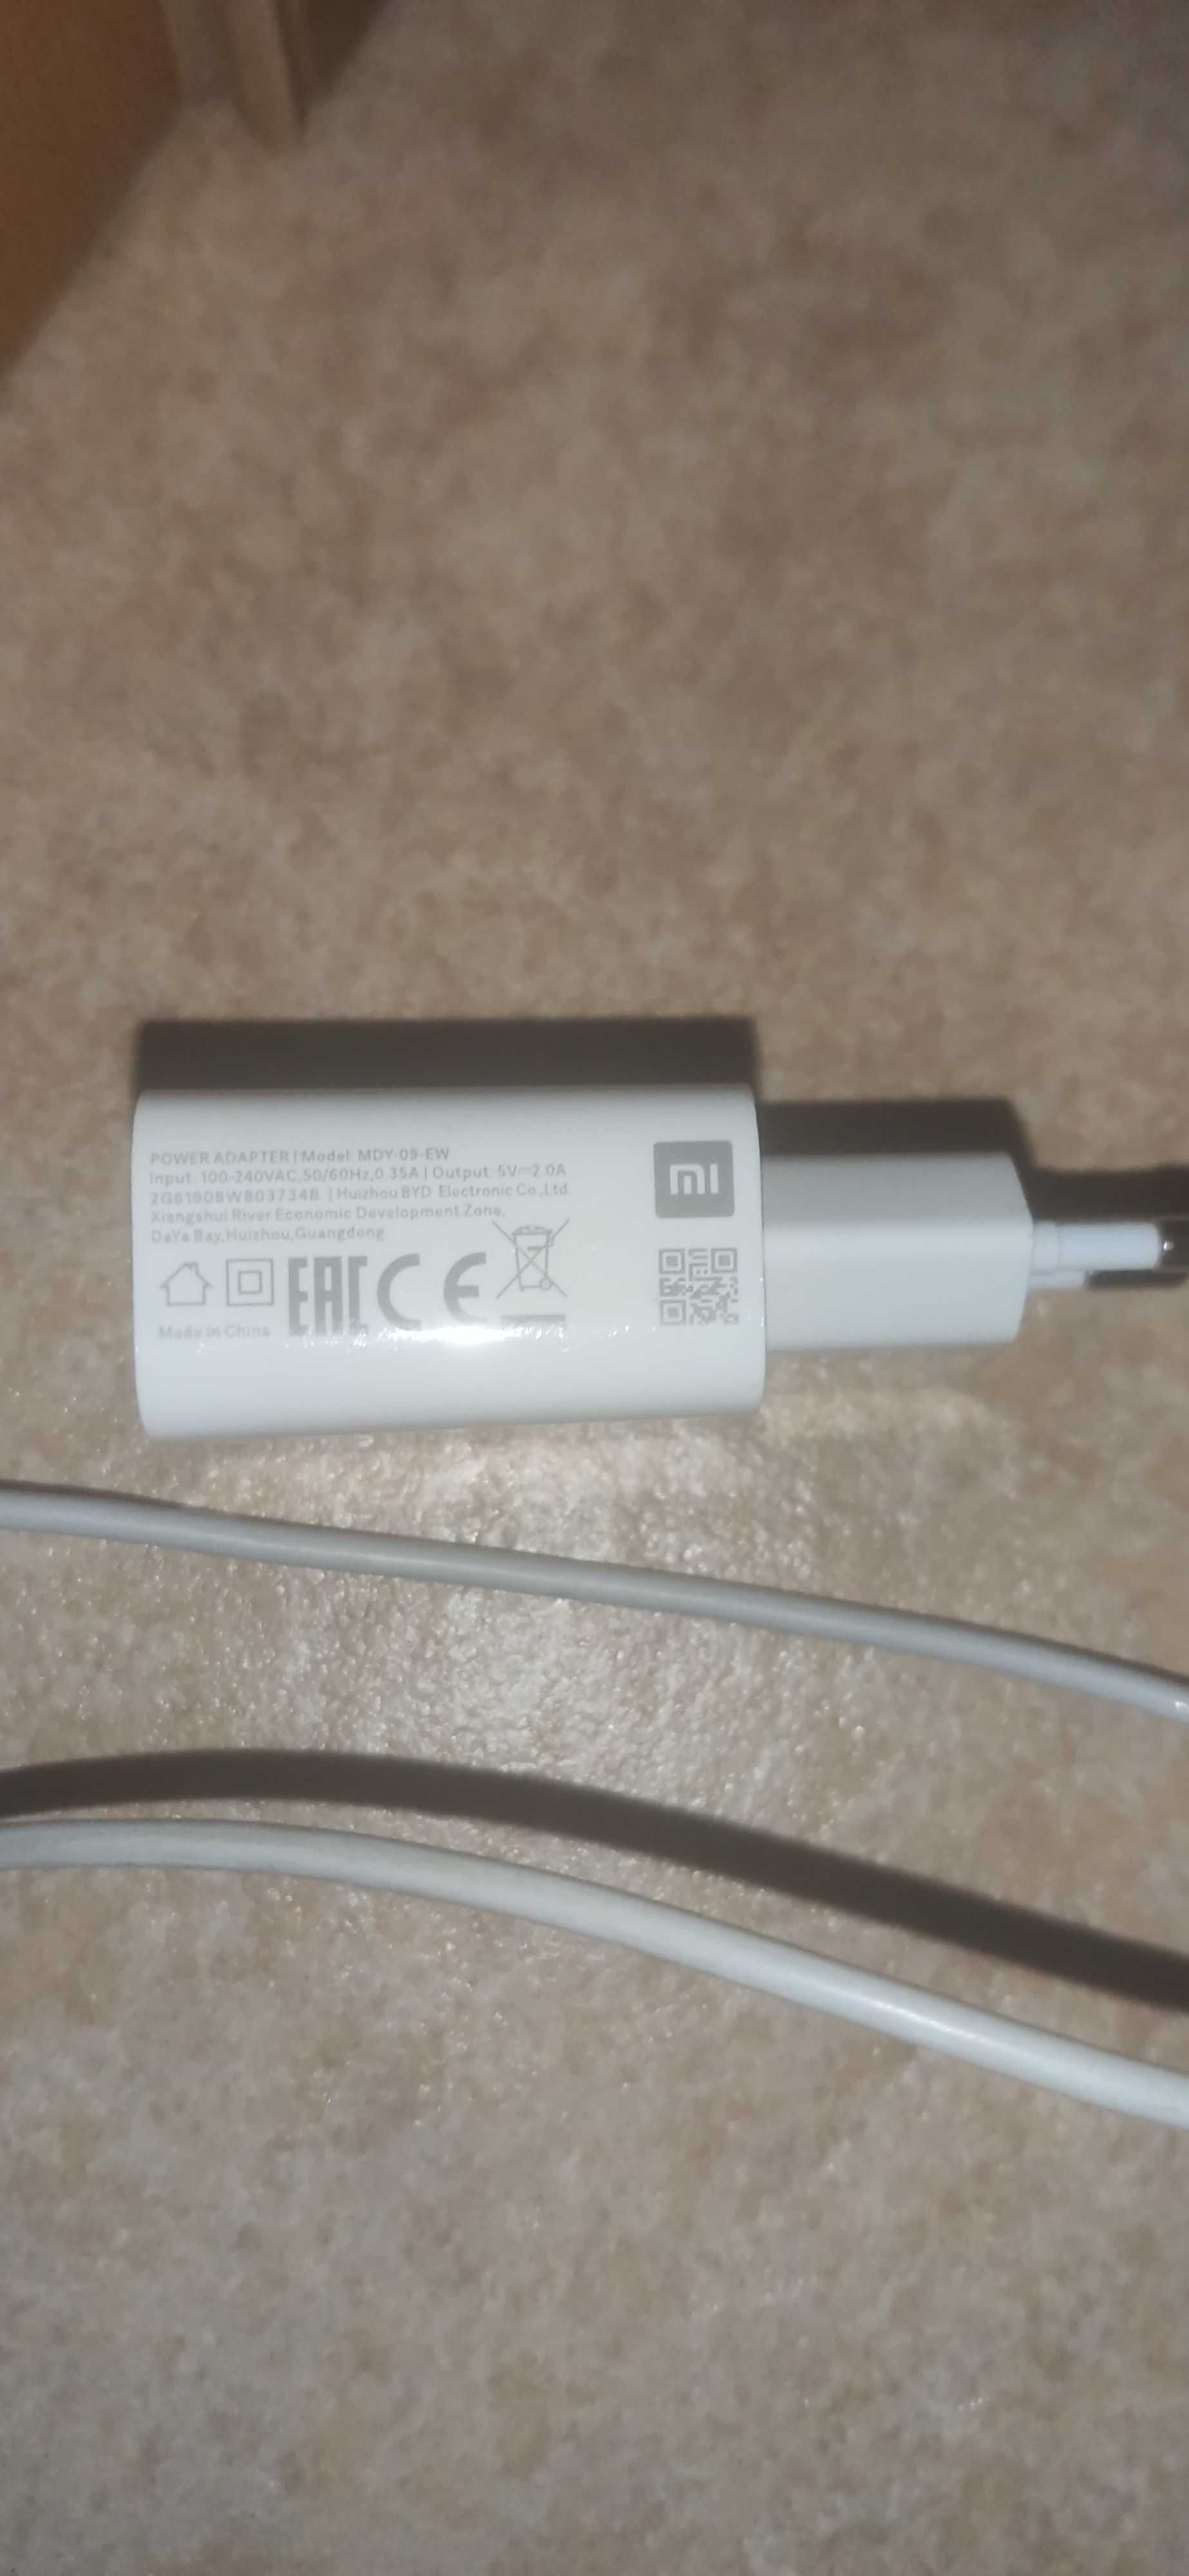 Carregador Xiaomi USB MDY-09-EW 0.35A 5V 10W Branco